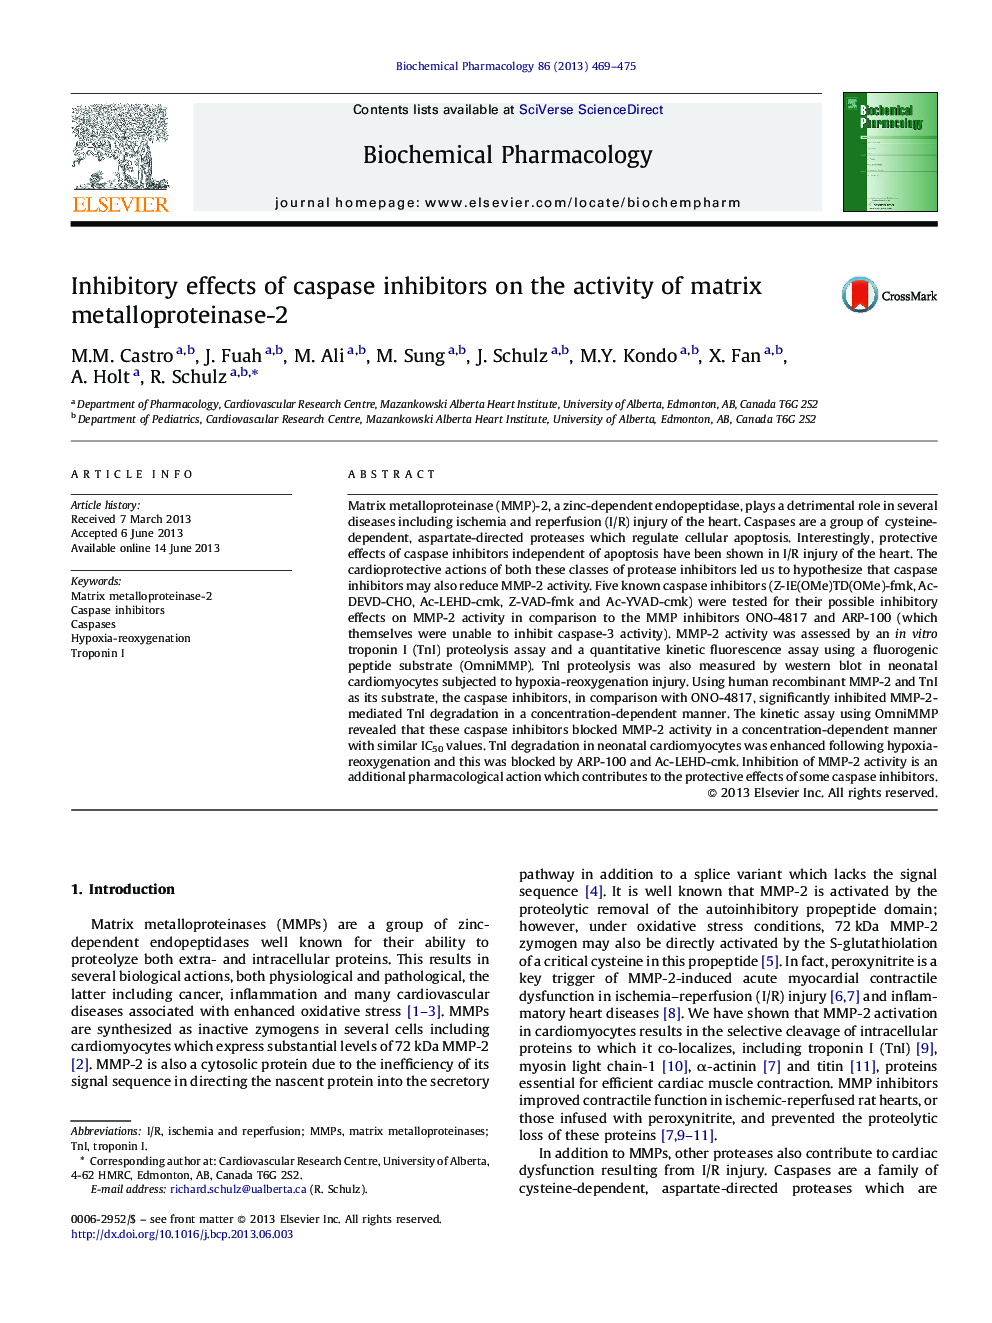 Inhibitory effects of caspase inhibitors on the activity of matrix metalloproteinase-2